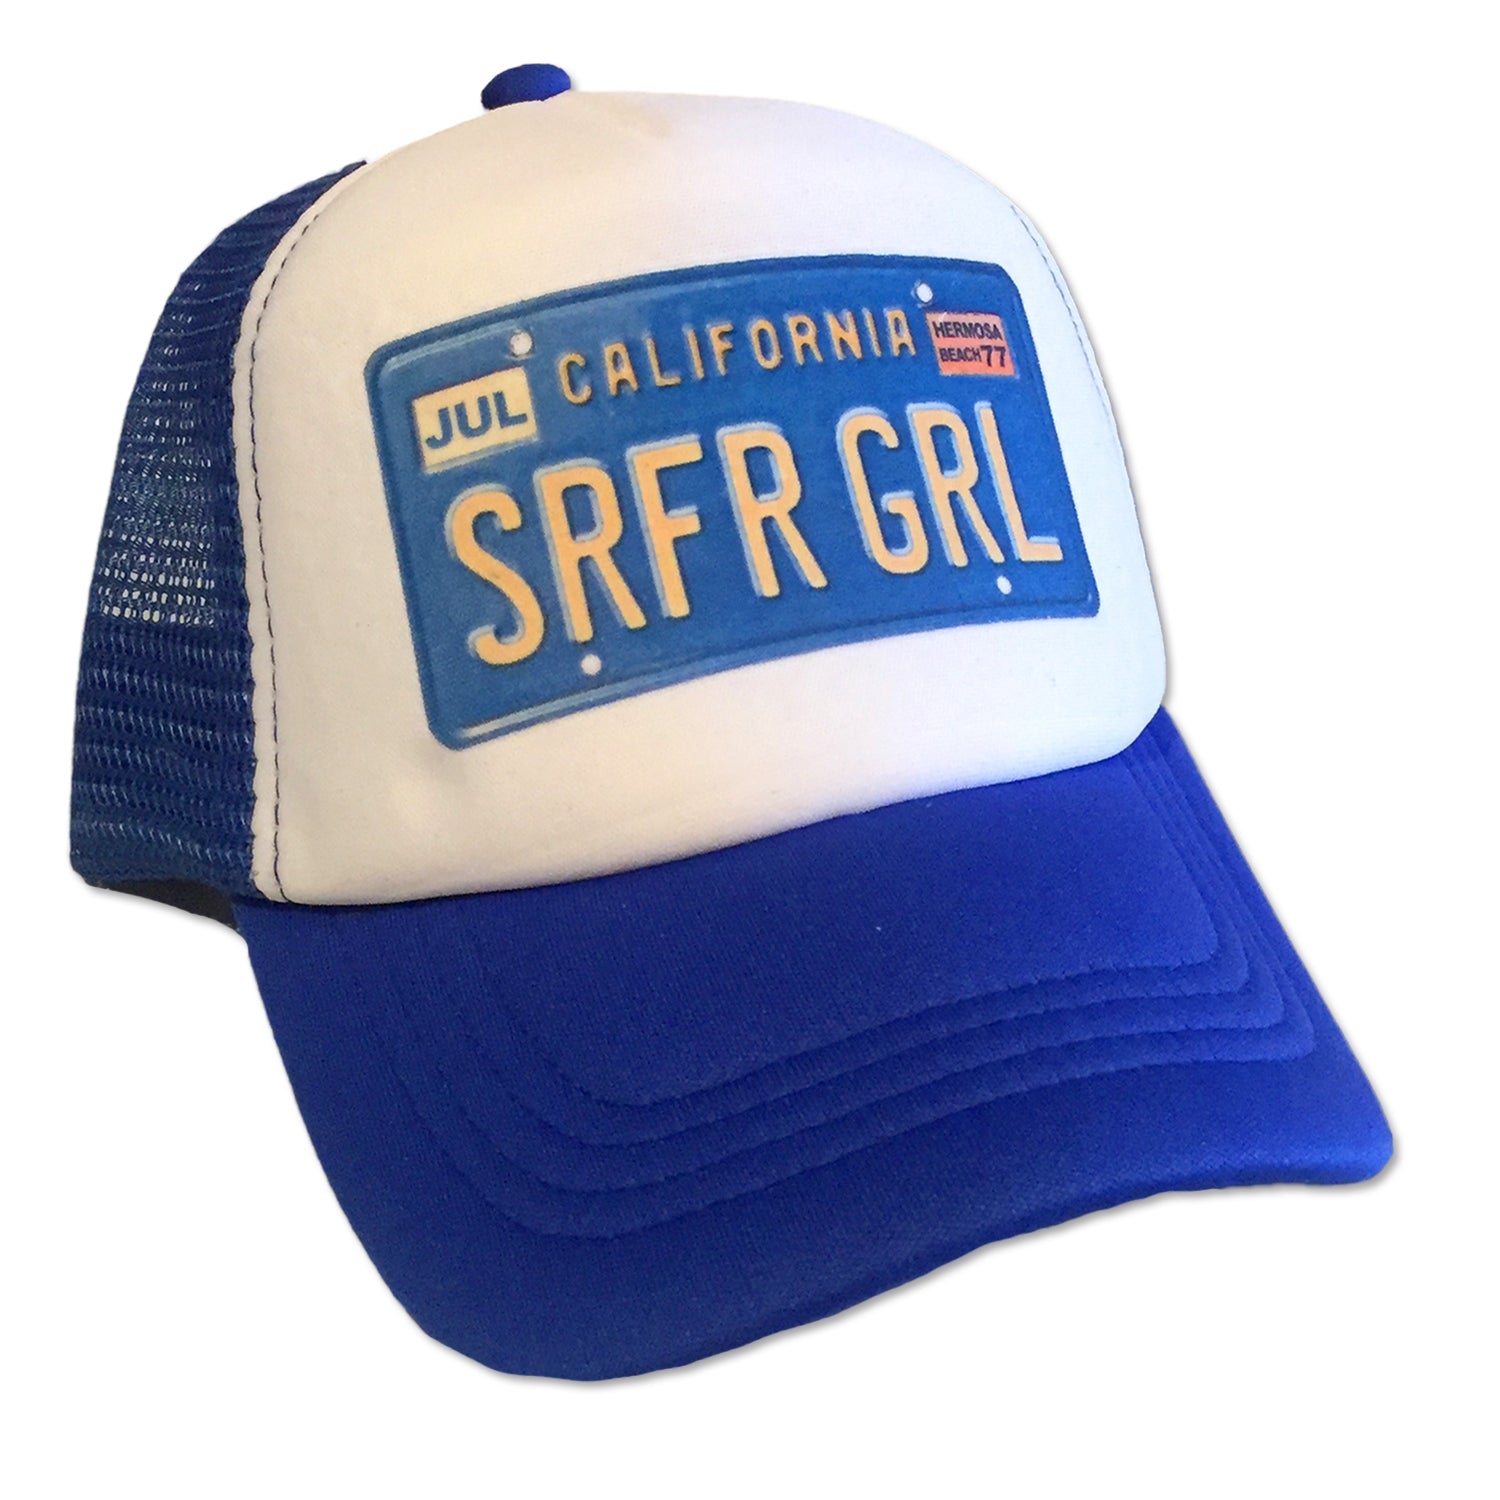 Sol Baby Surfer Girl California License Plate Trucker Hat